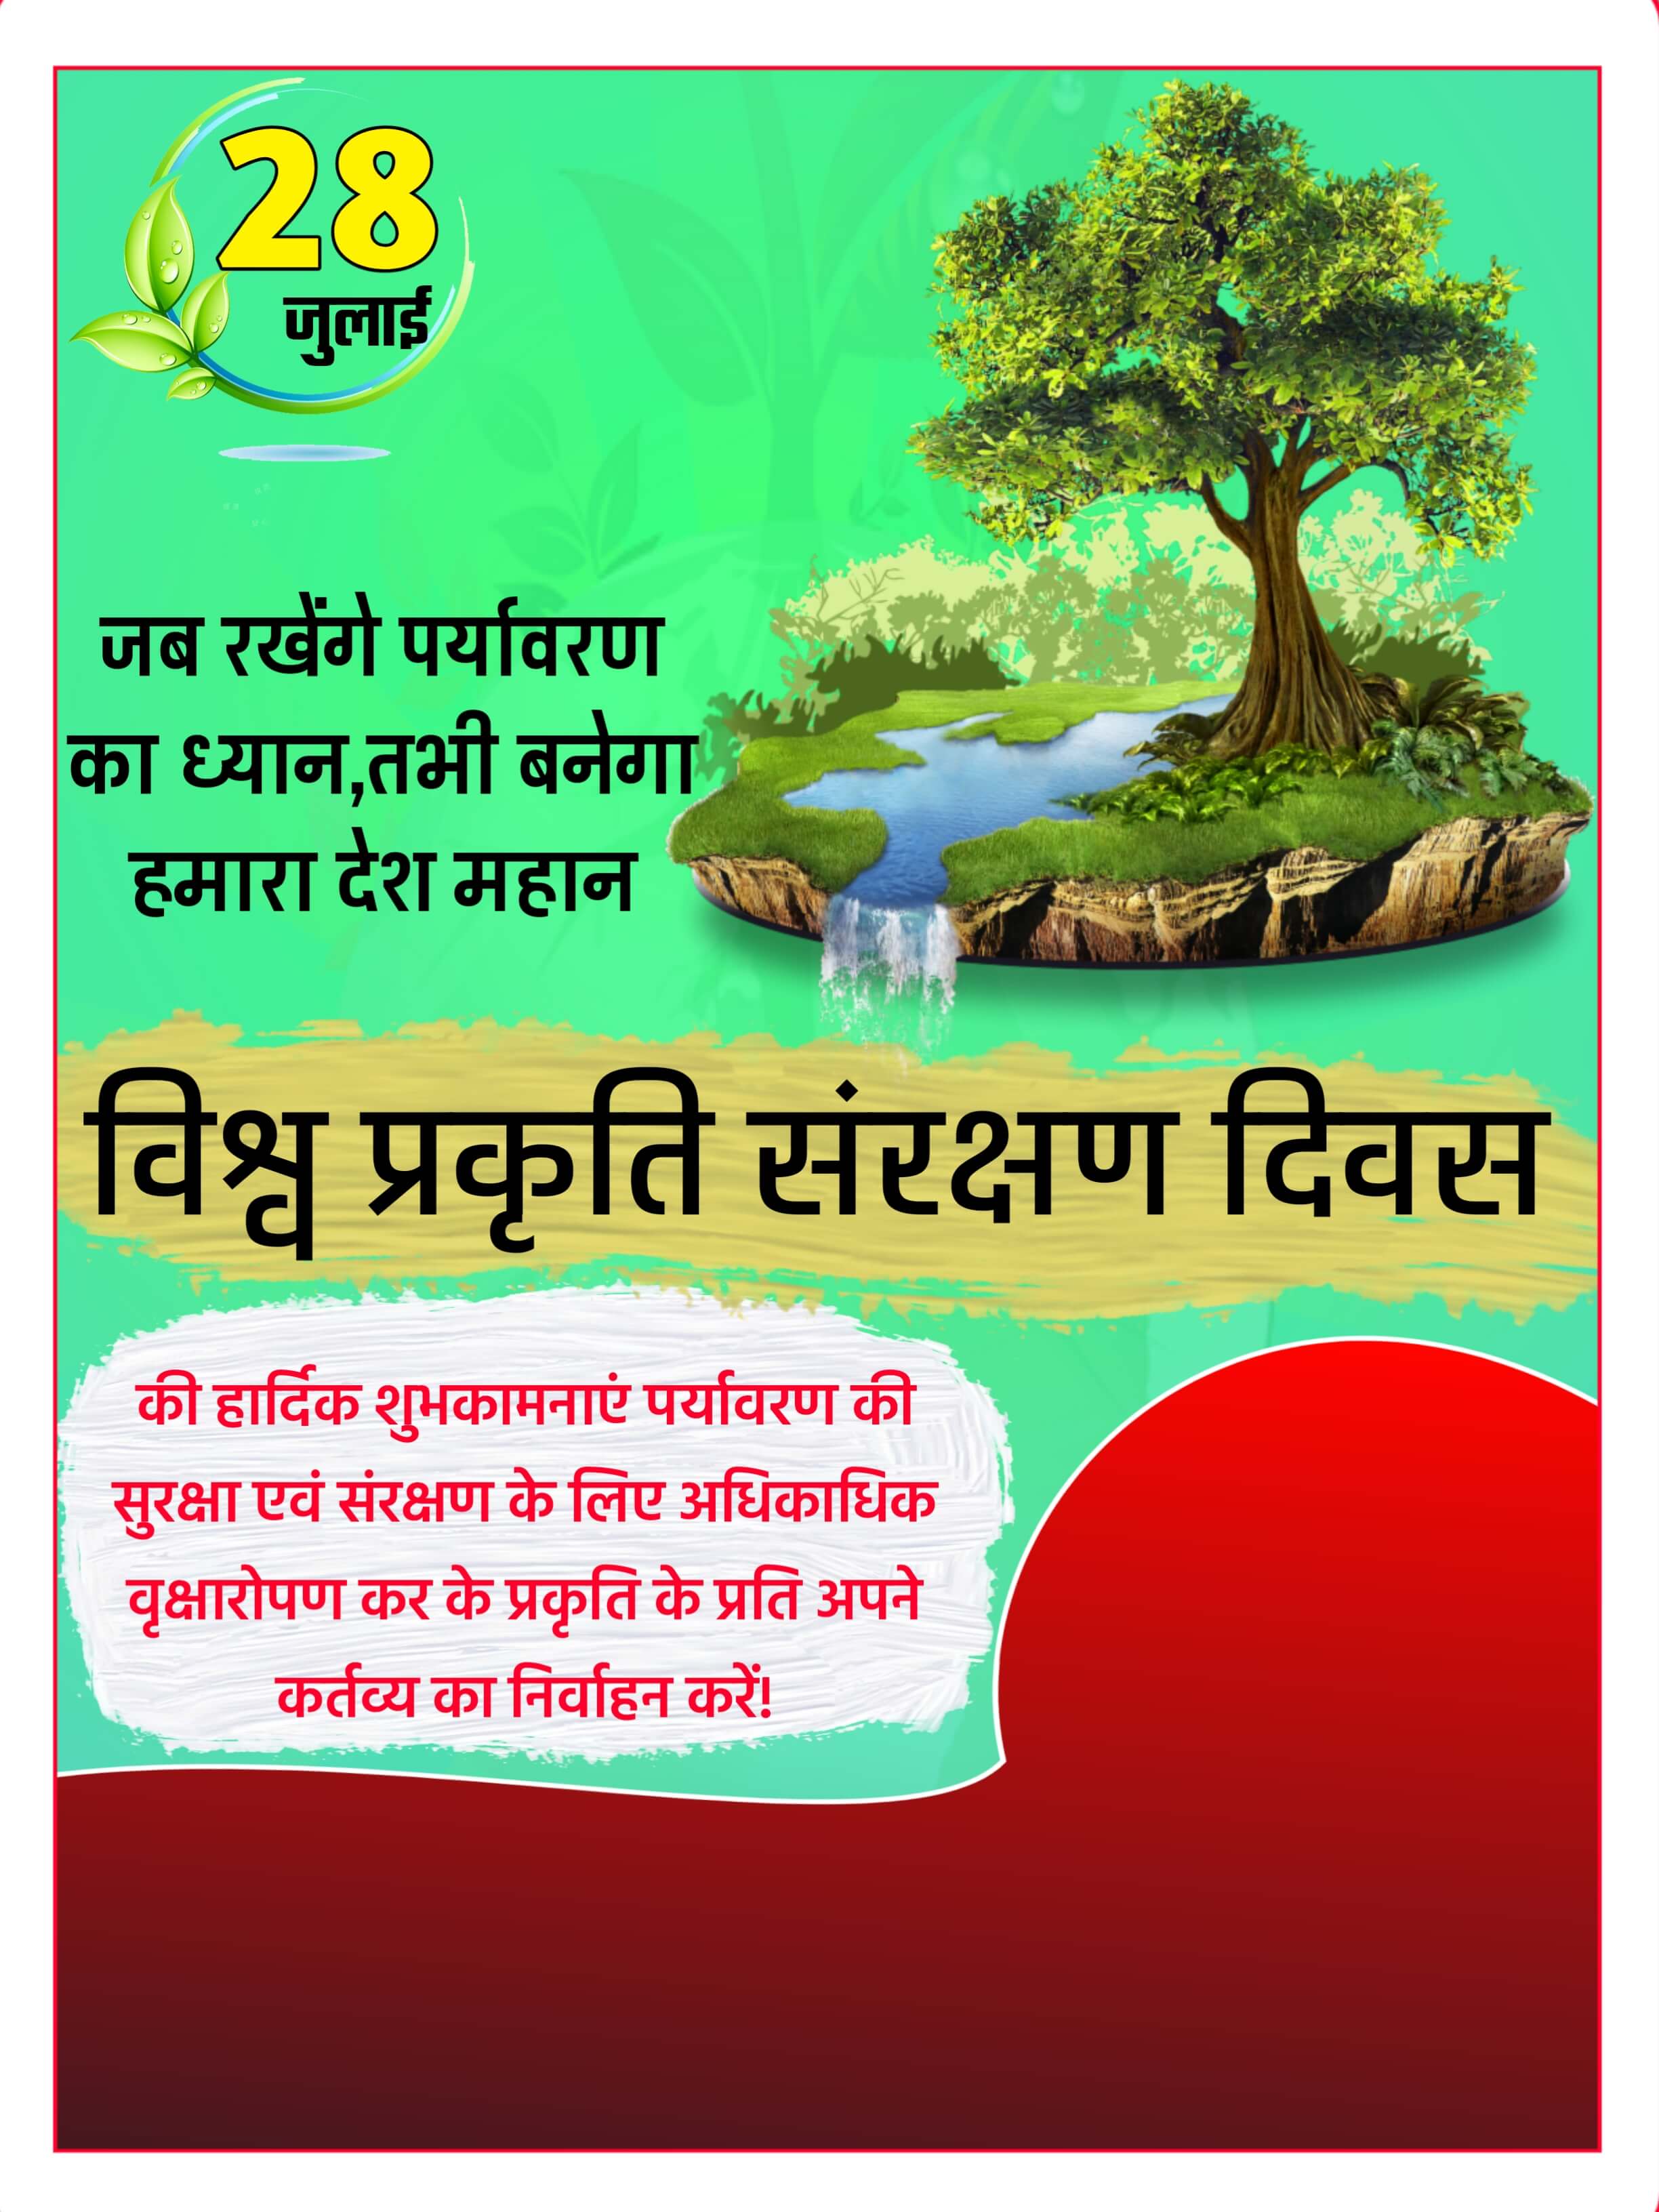 विश्व प्रकृति संरक्षण दिवस पोस्टर बनाये| Vishwa prakriti sanrakshan Divas poster plp file| how to make world natural conservation day banner| how to make world natural conservation day poster in mobile